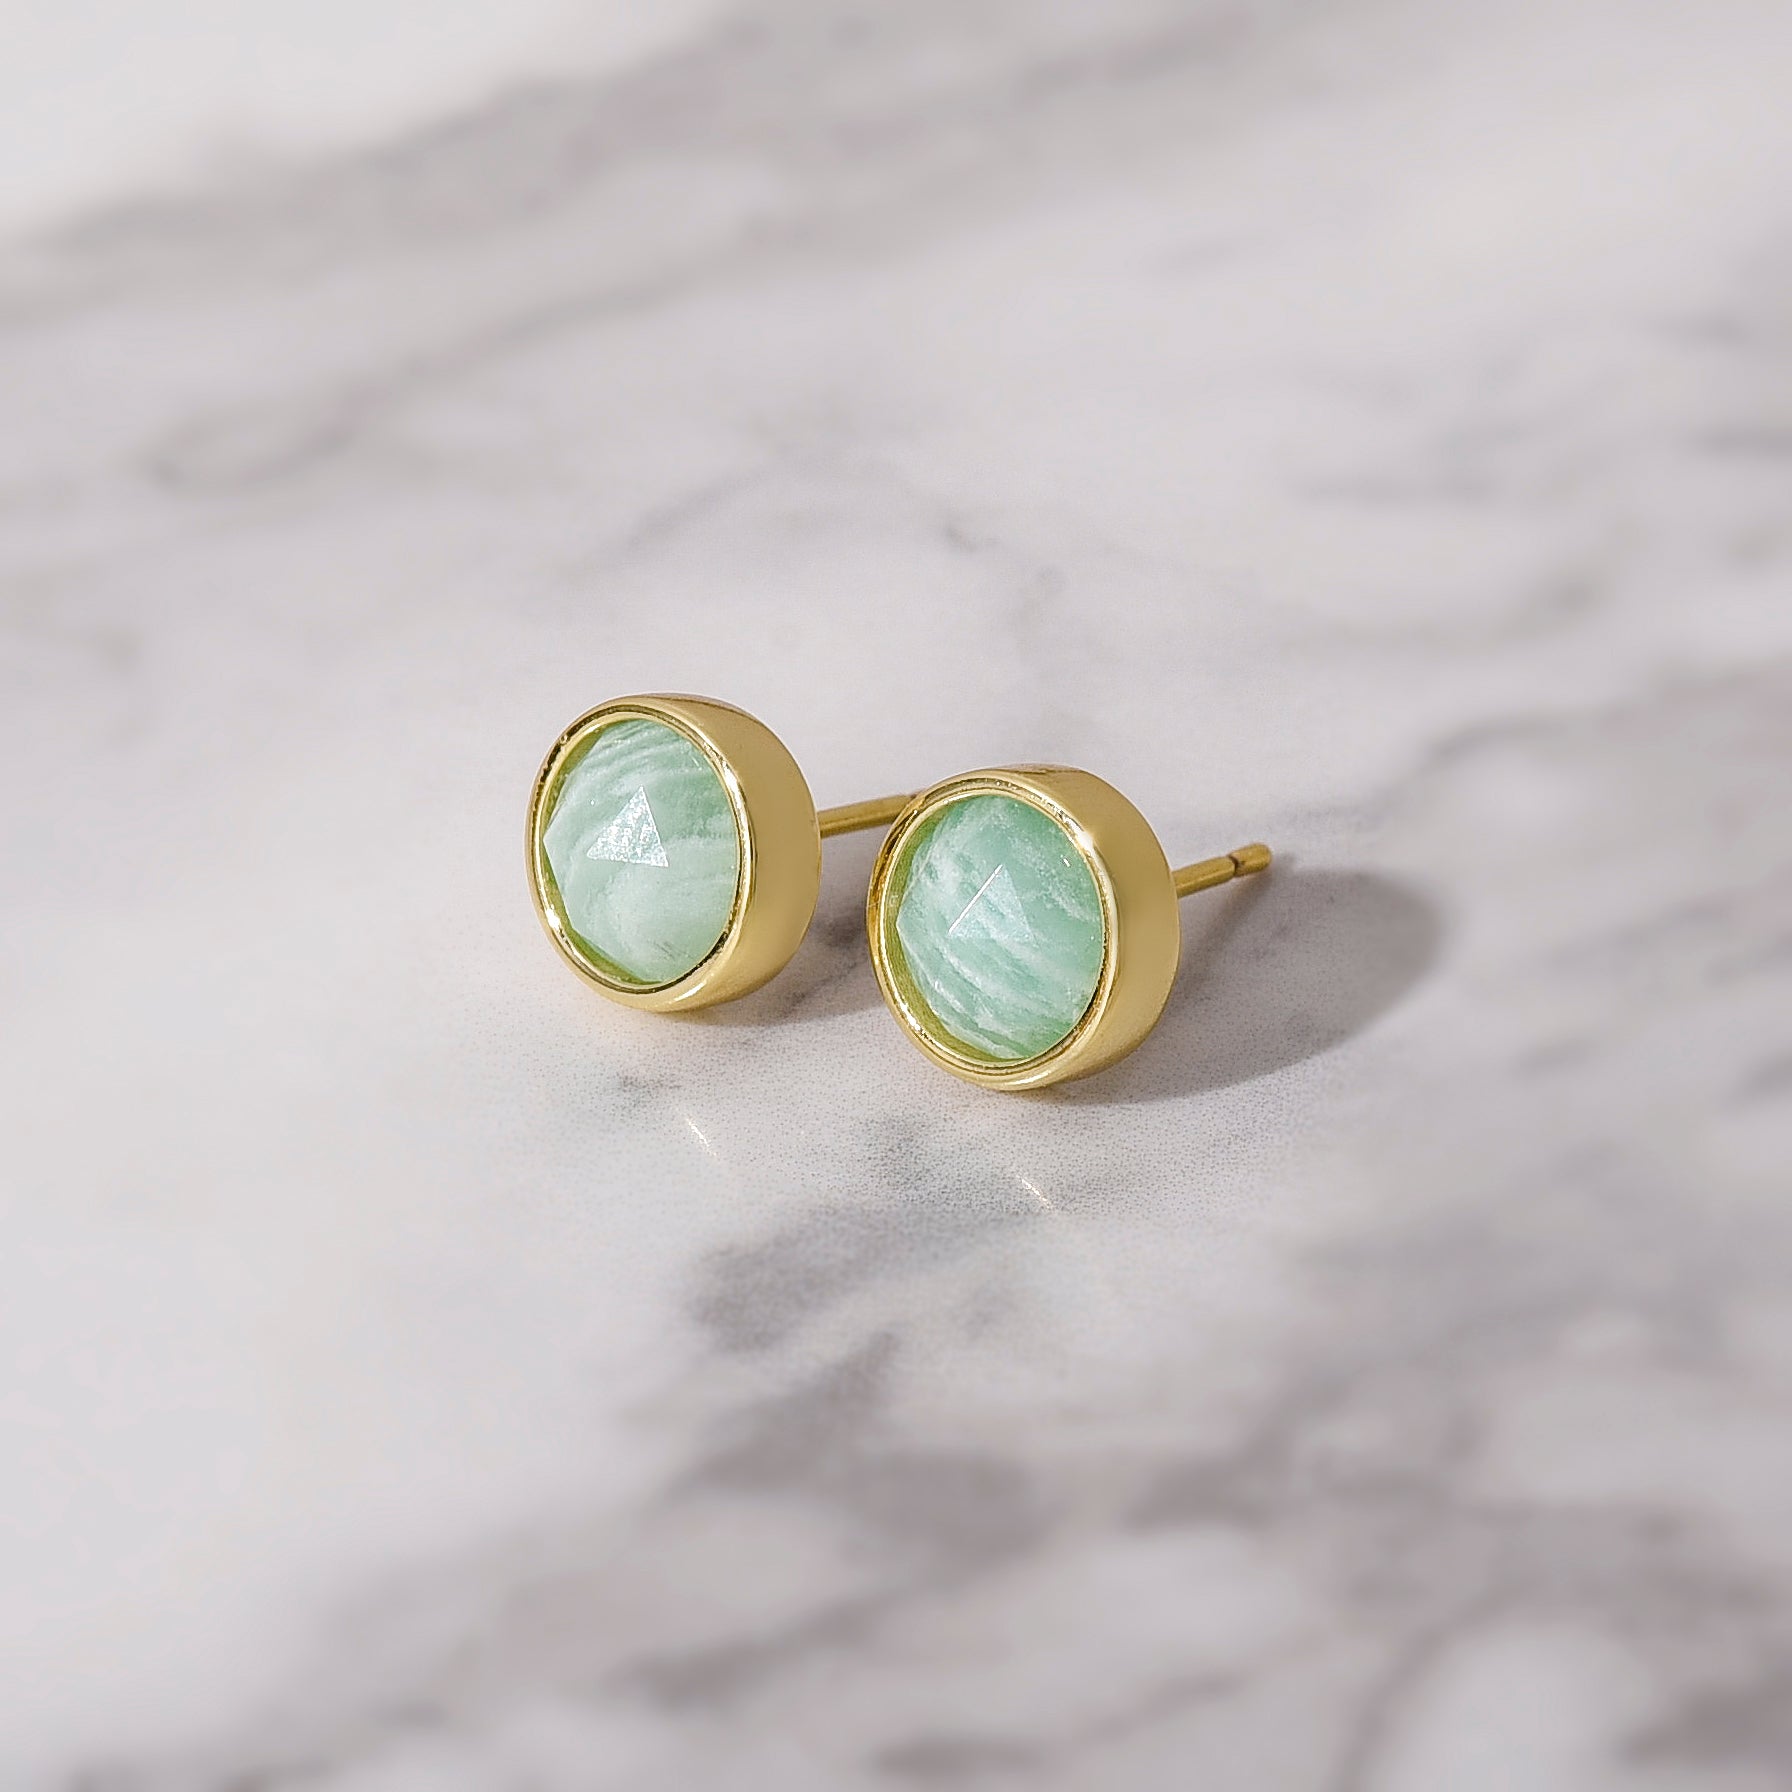 Gold Plated Round Faceted Gemstone Stud Earrings, Birthstone Earrings Jewelry BT024